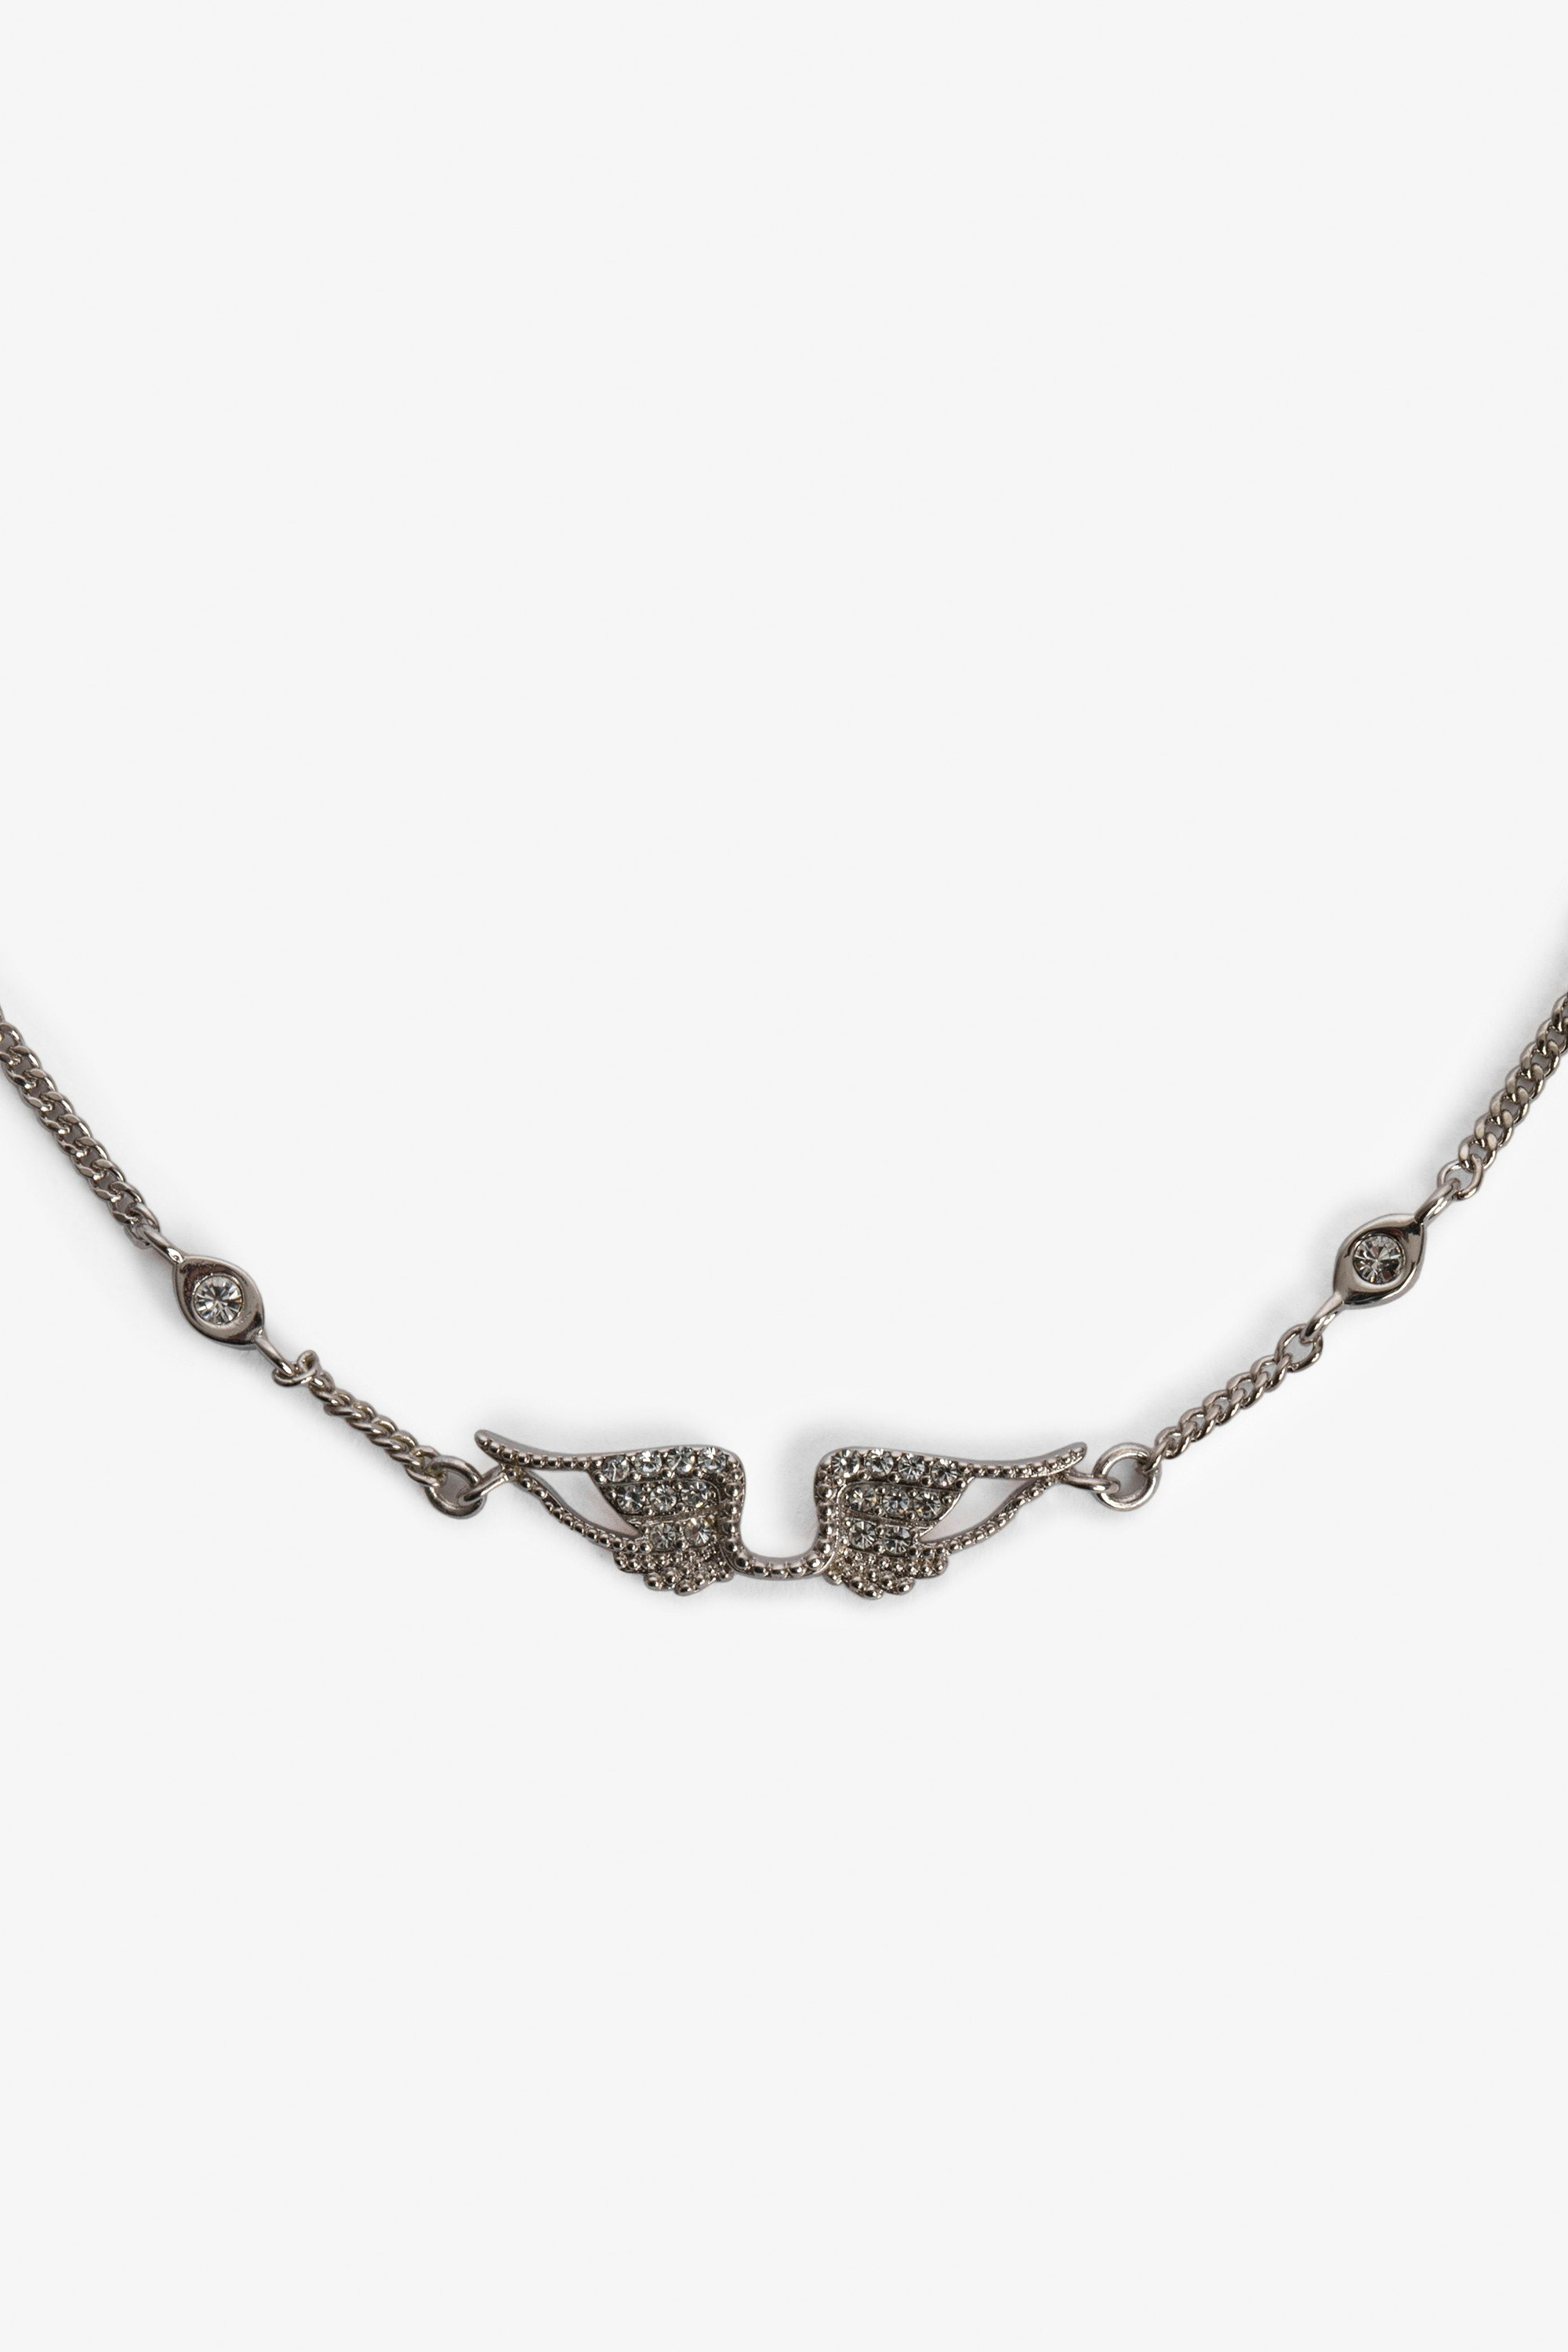 Rock Bracelet - Brass and rhinestone chain bracelet with wings.